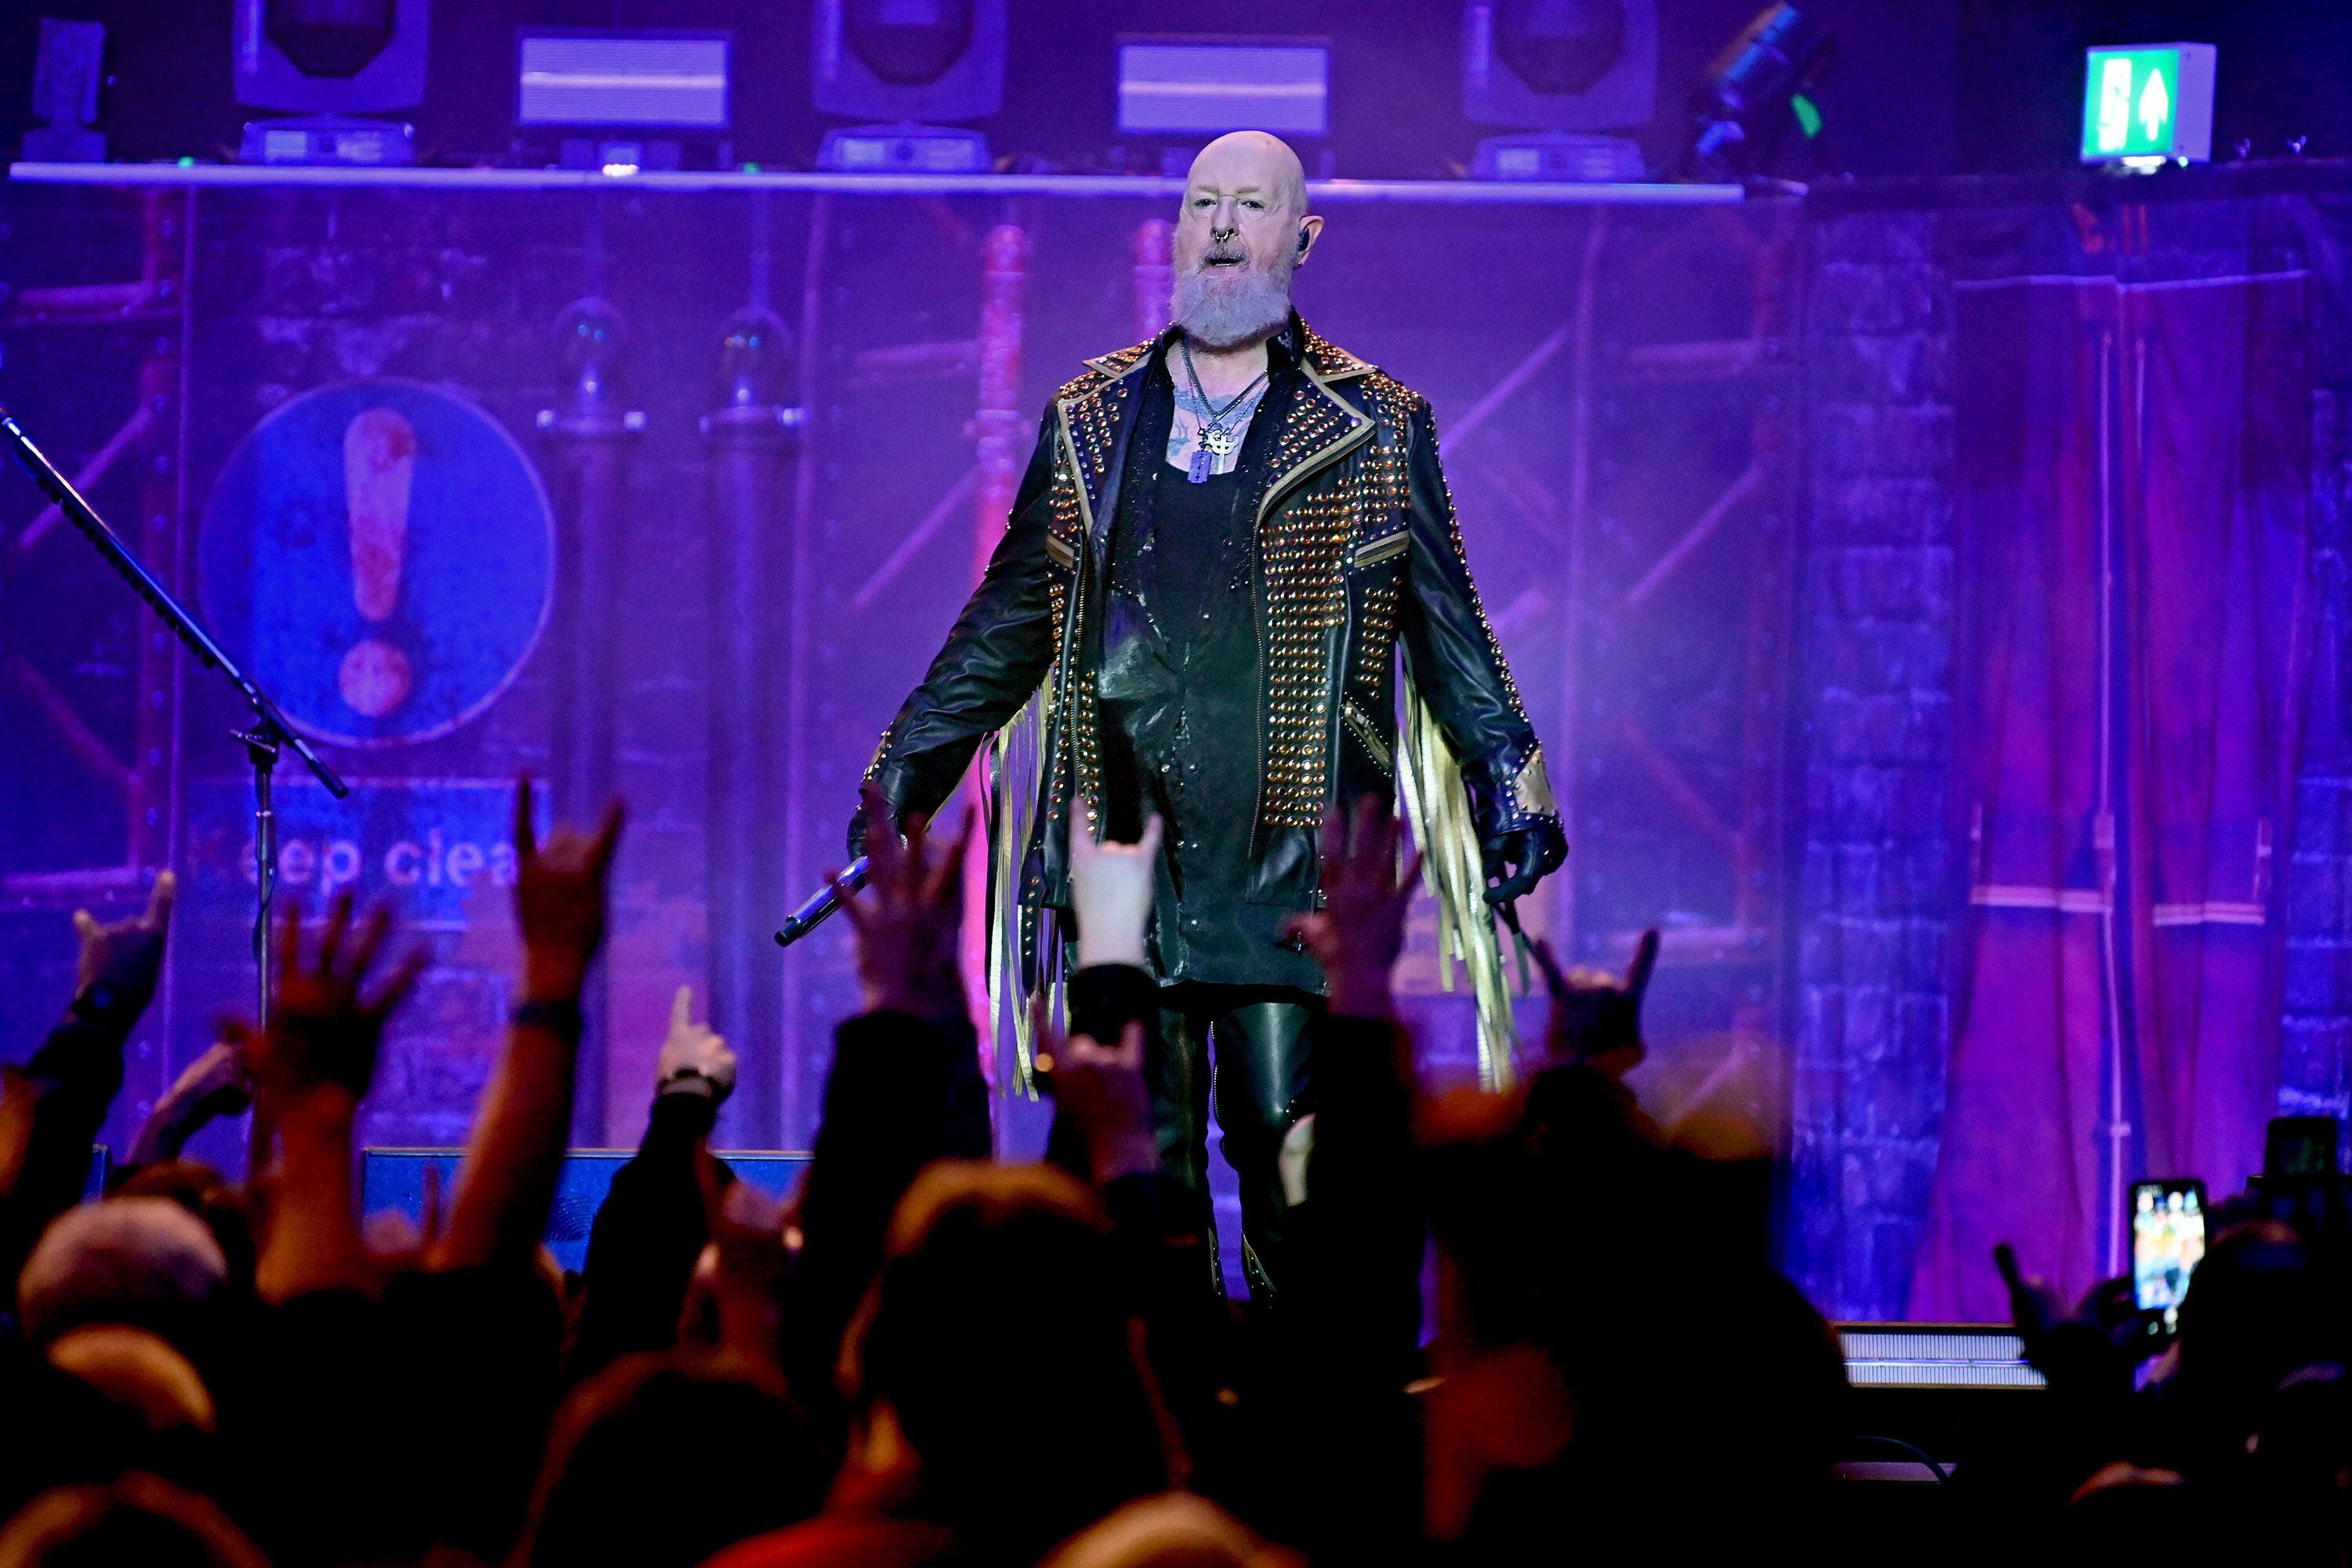 Judas Priest celebrates 50 years with tour - The Columbian